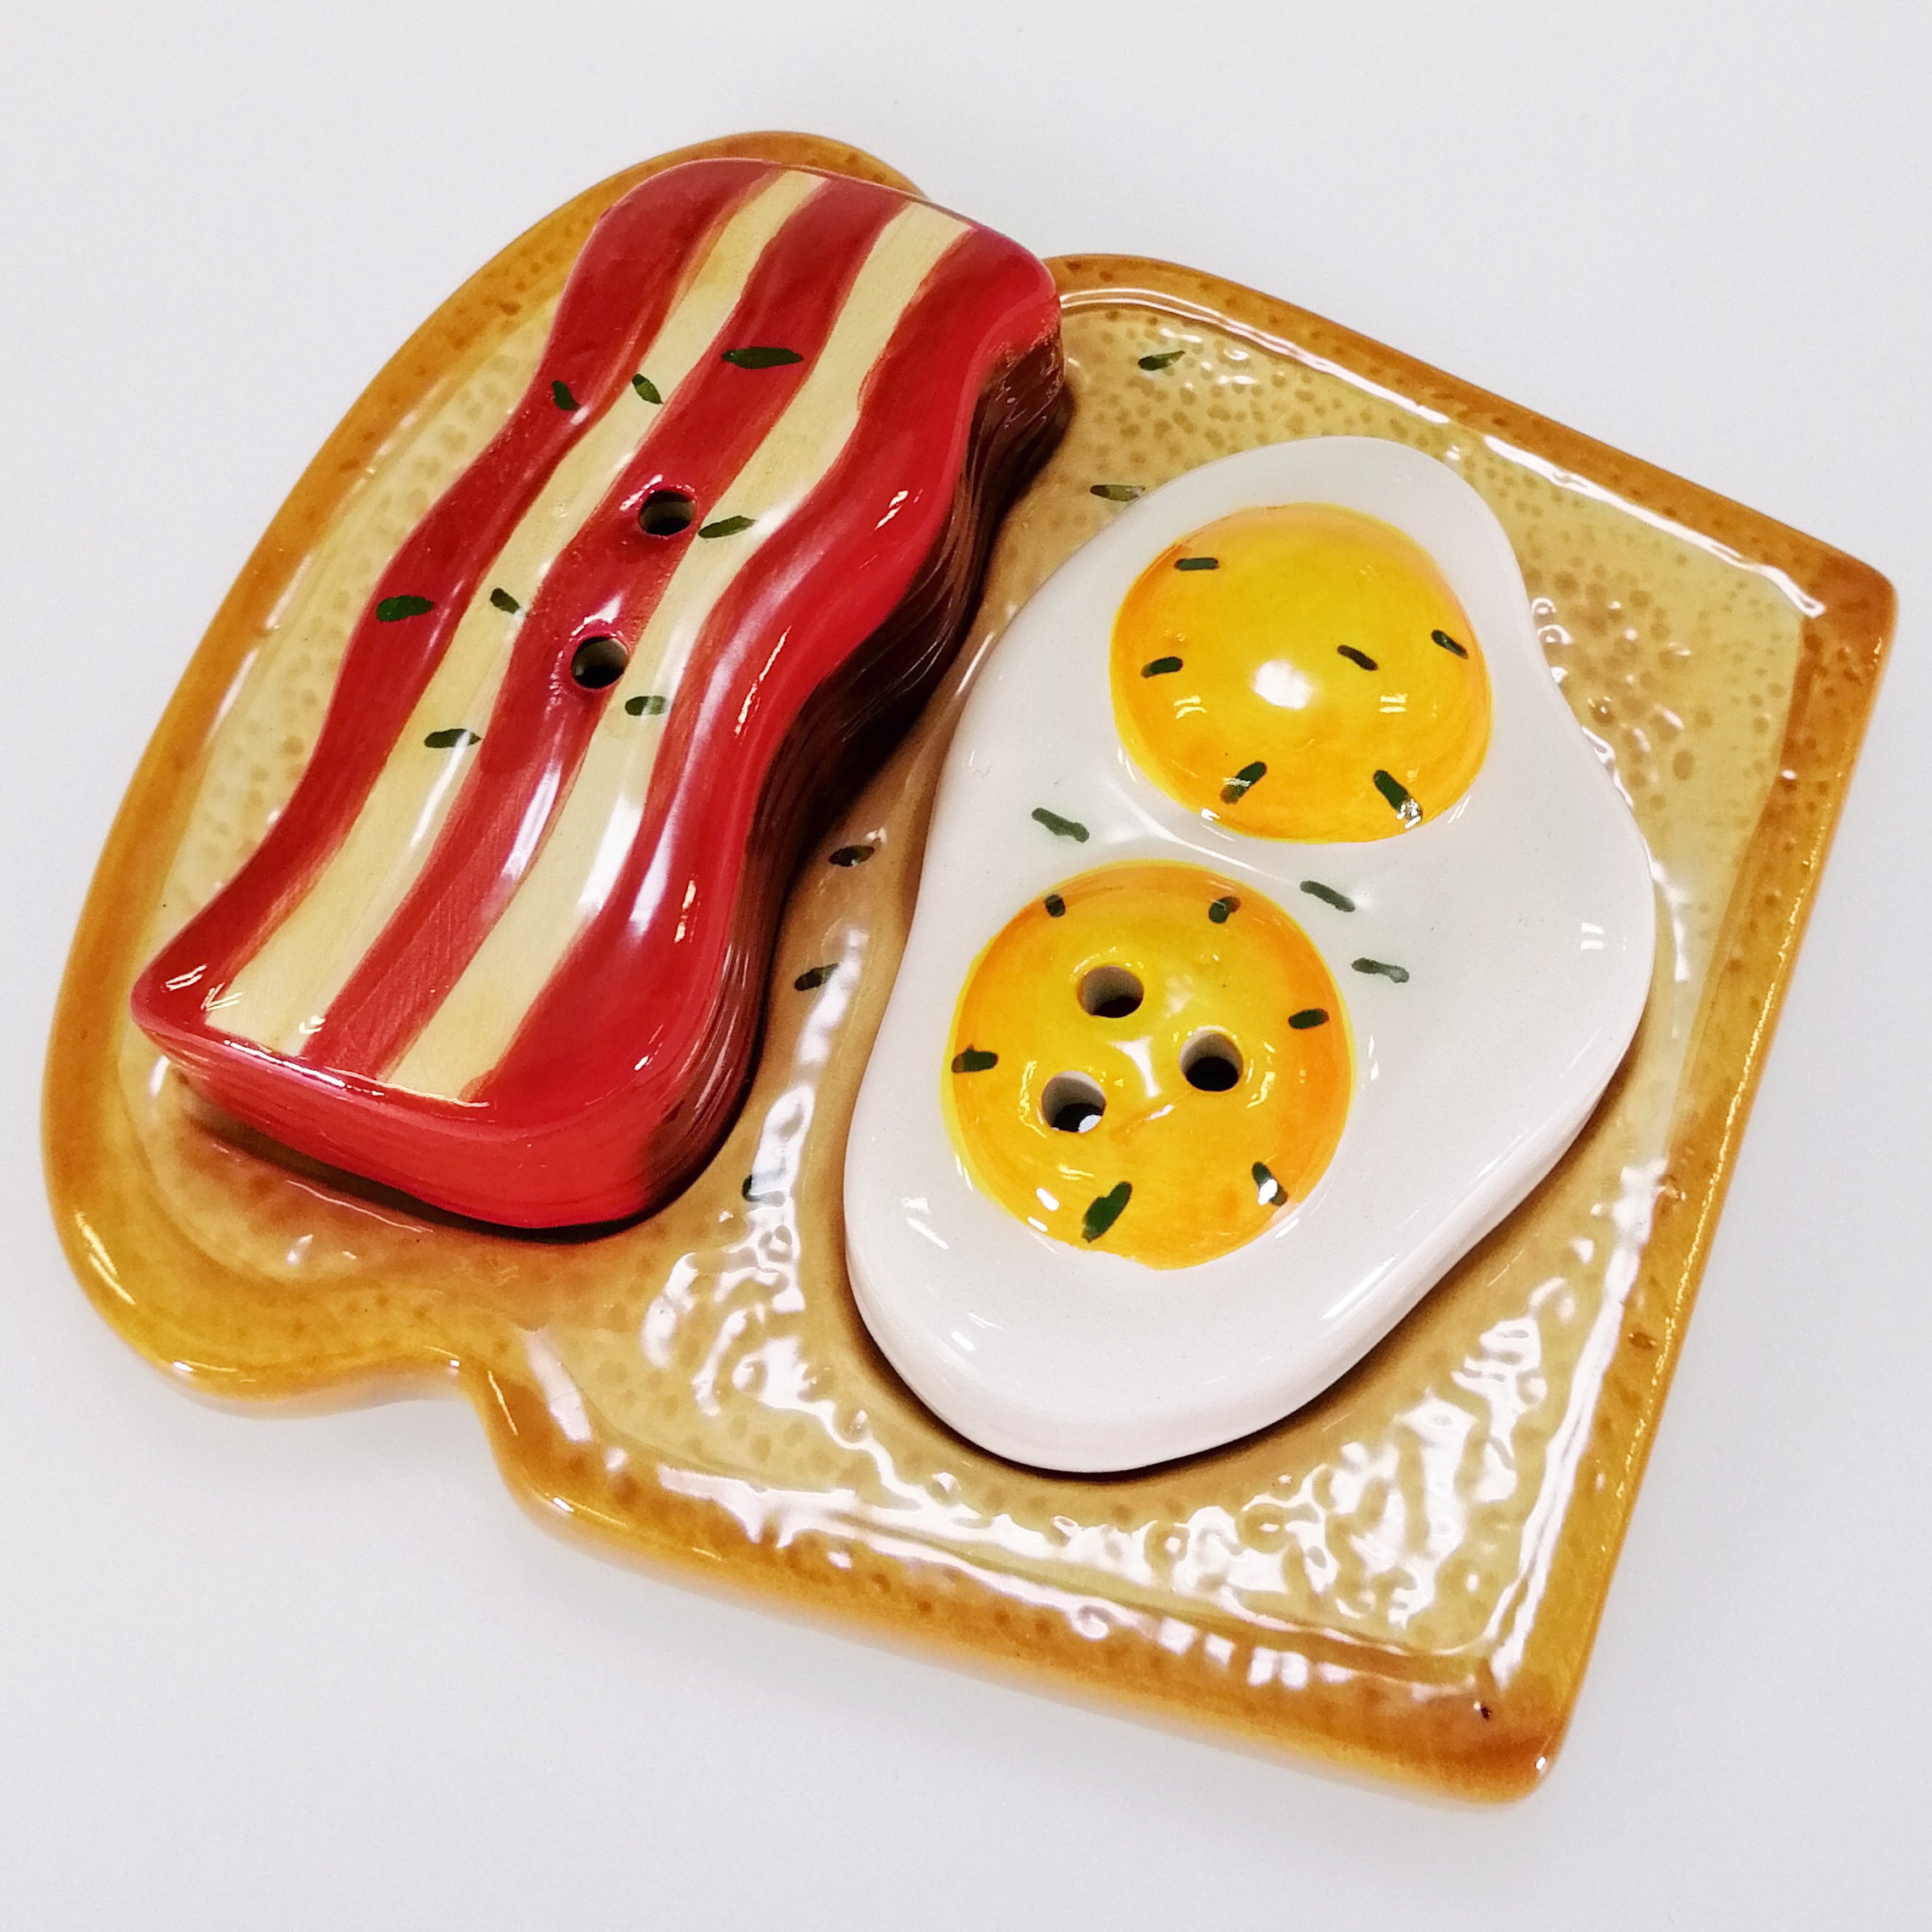 Bacon & Egg' Collectible Ceramic Salt & Pepper Set